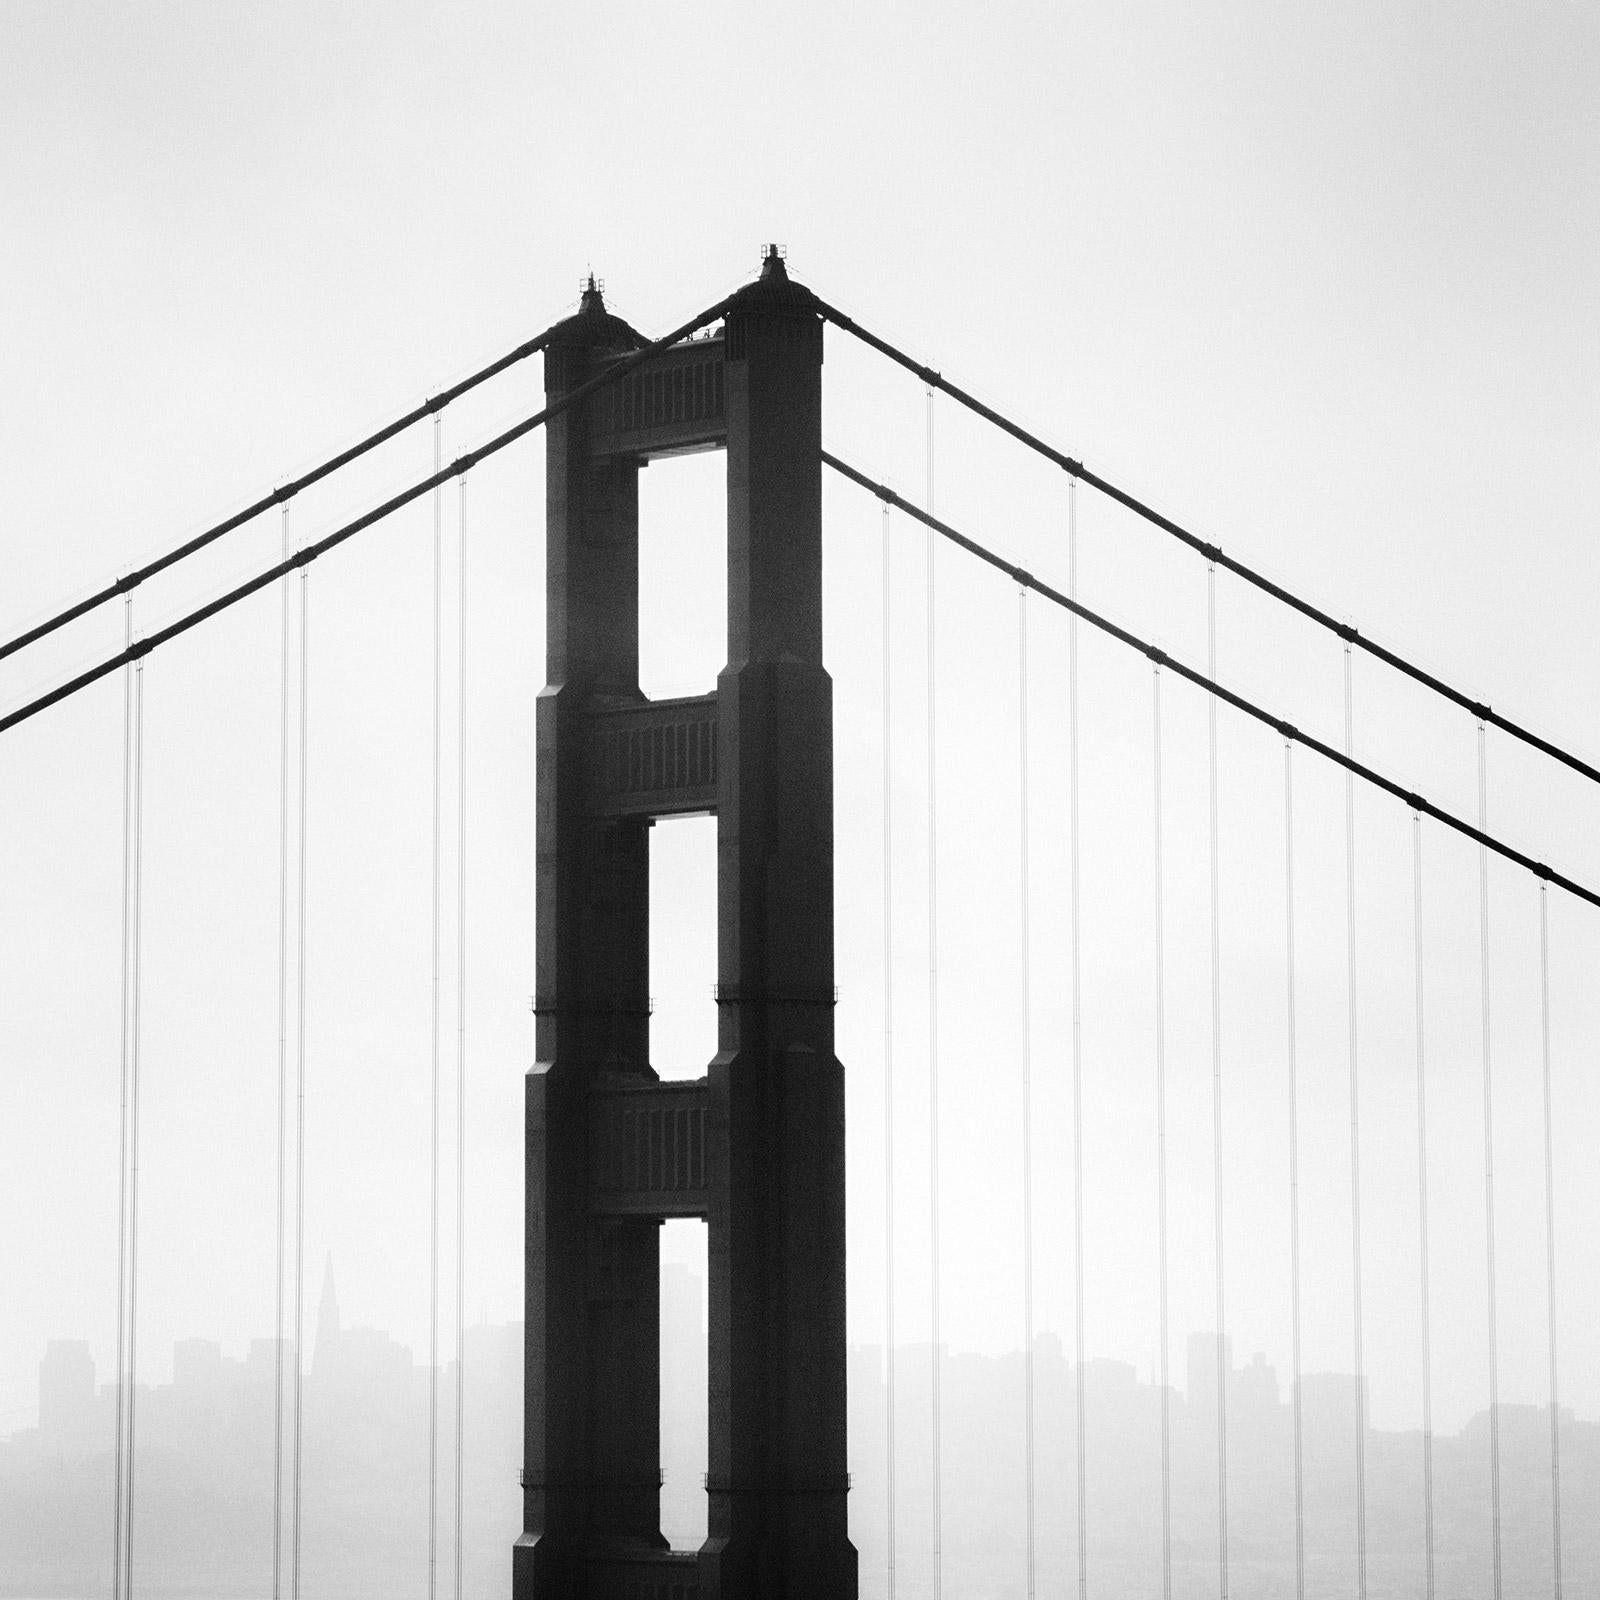 Gerald Berghammer Landscape Photograph - Golden Gate Bridge, San Francisco, USA, minimalist black and white landscape